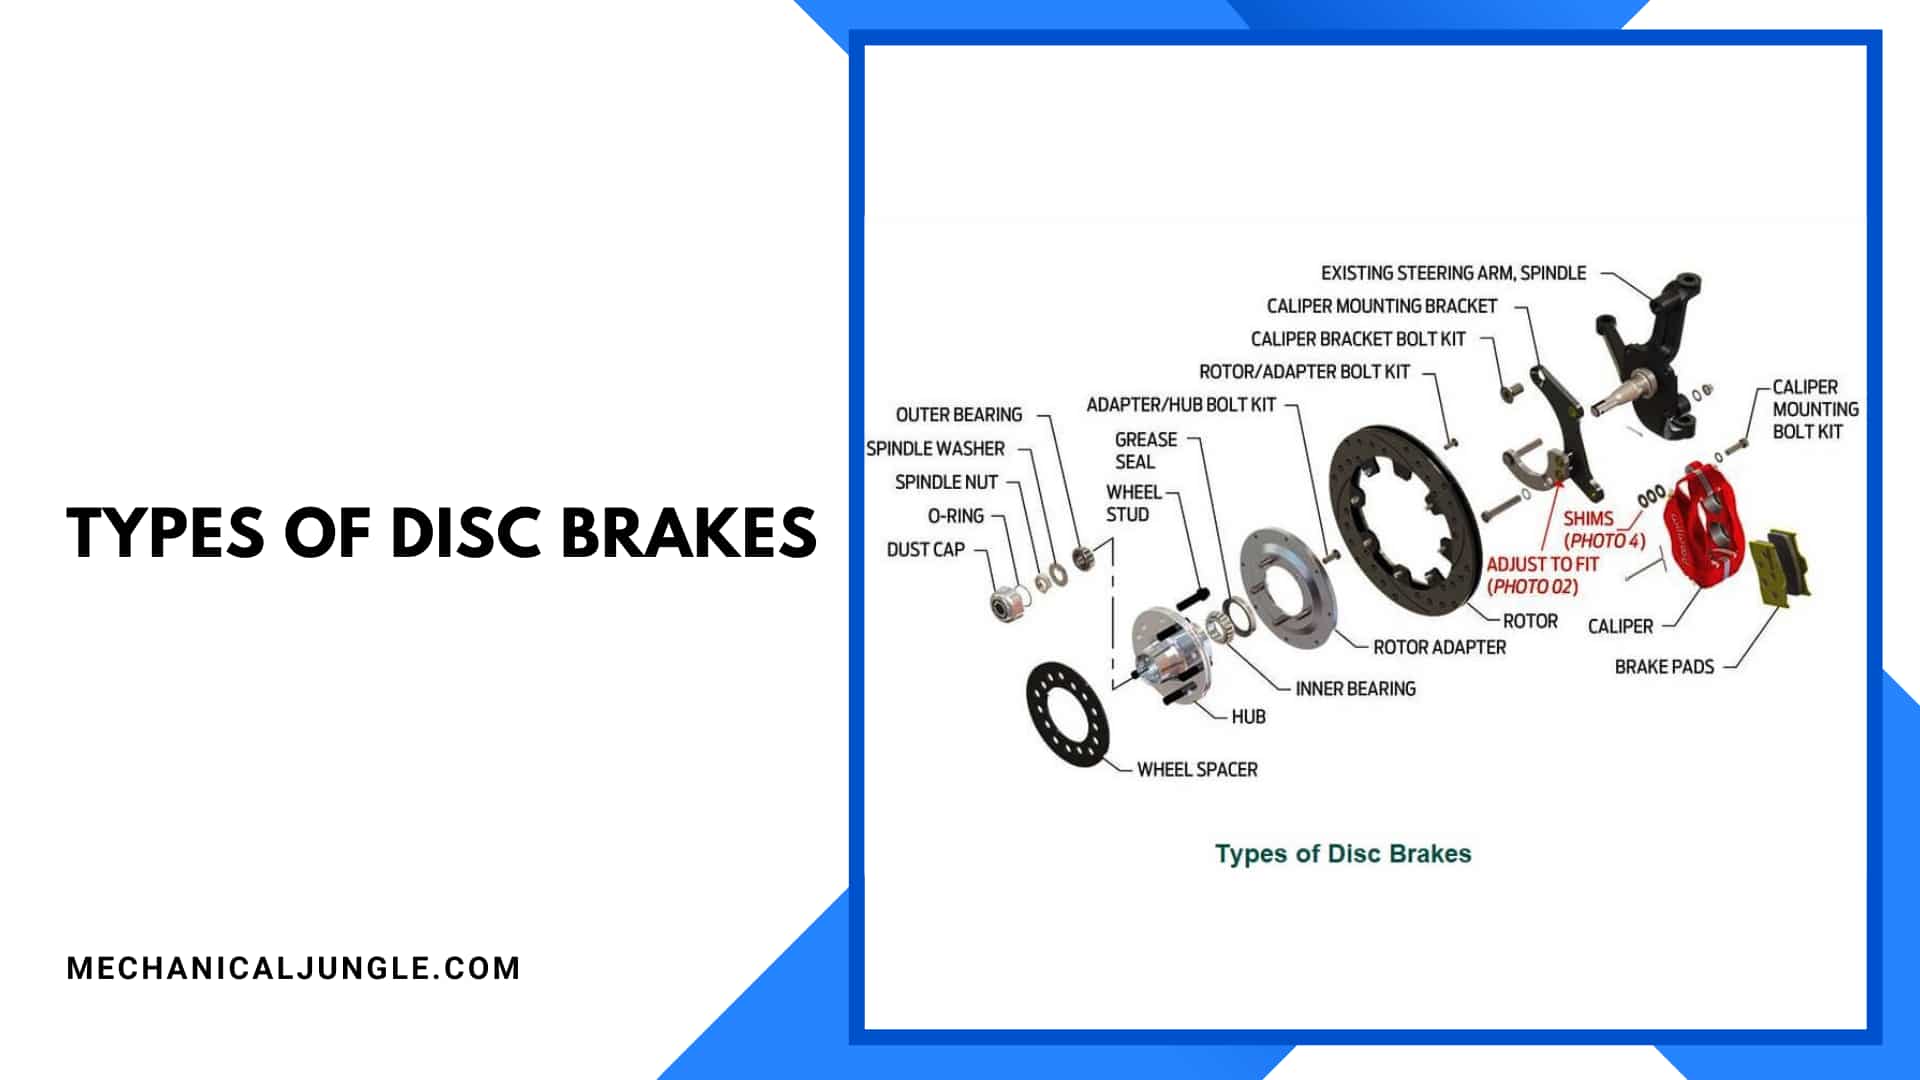 Types of Disc Brakes